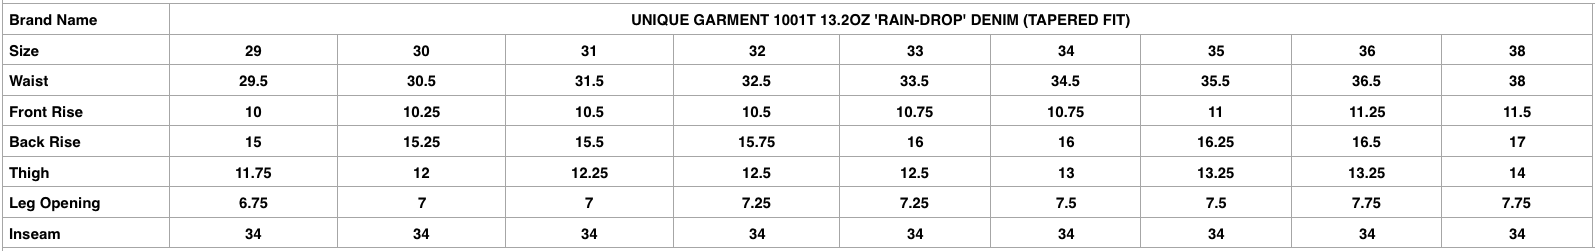 Unique Garment 1001T 13.2oz 'RAIN-DROP' Denim (Tapered Fit)